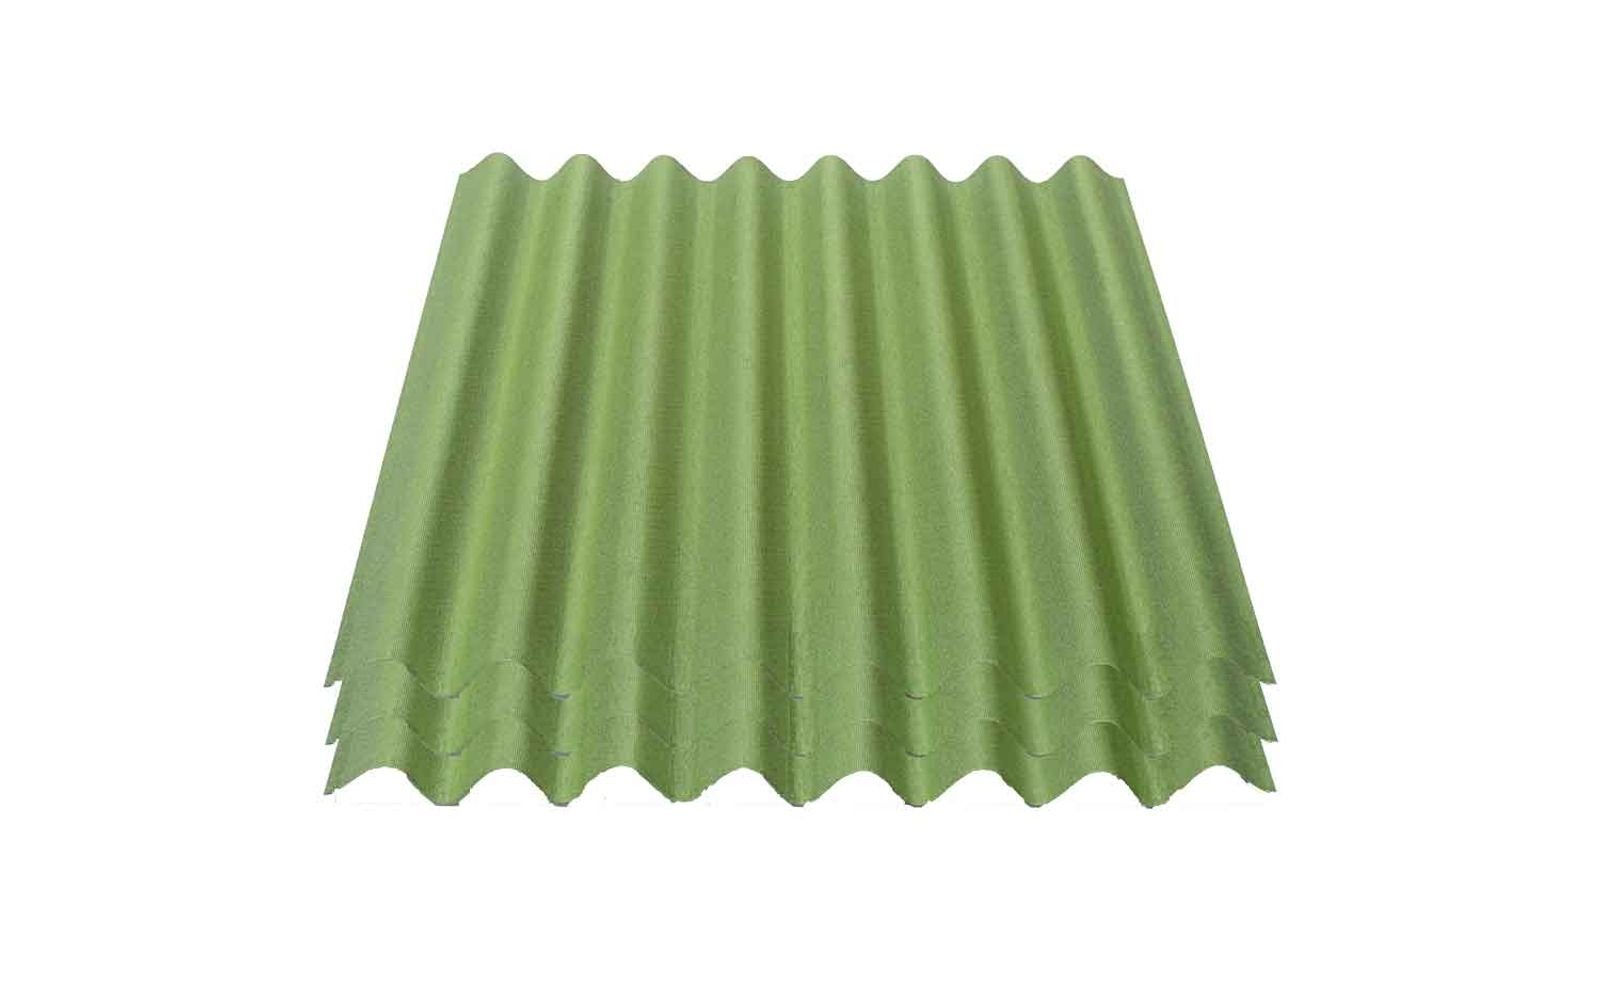 Onduline Dachpappe Onduline Easyline Dachplatte Wandplatte Bitumenwellplatten Wellplatte 3x0,76m² - grün, wellig, 2.28 m² pro Paket, (3-St)